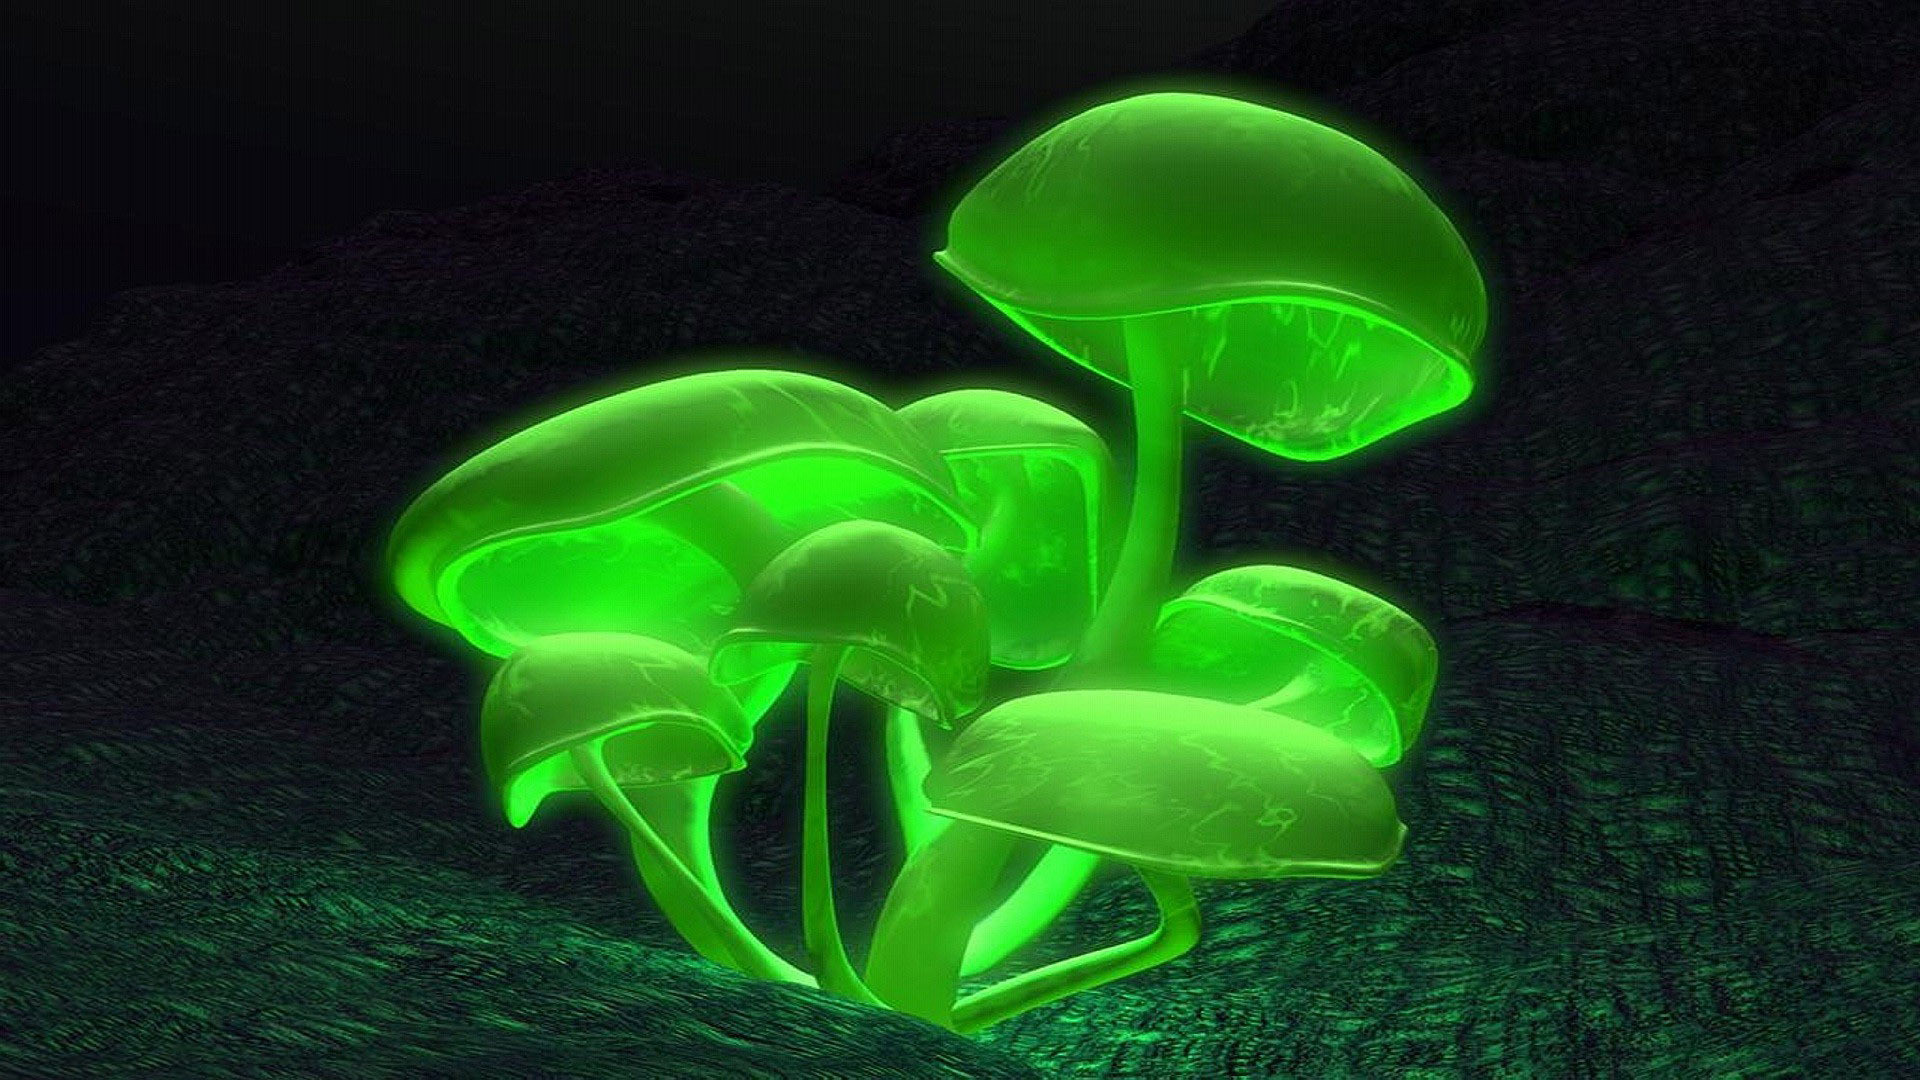 1920x1080 Pics Photos - Neon Glowing Mushrooms 12383 Jpg